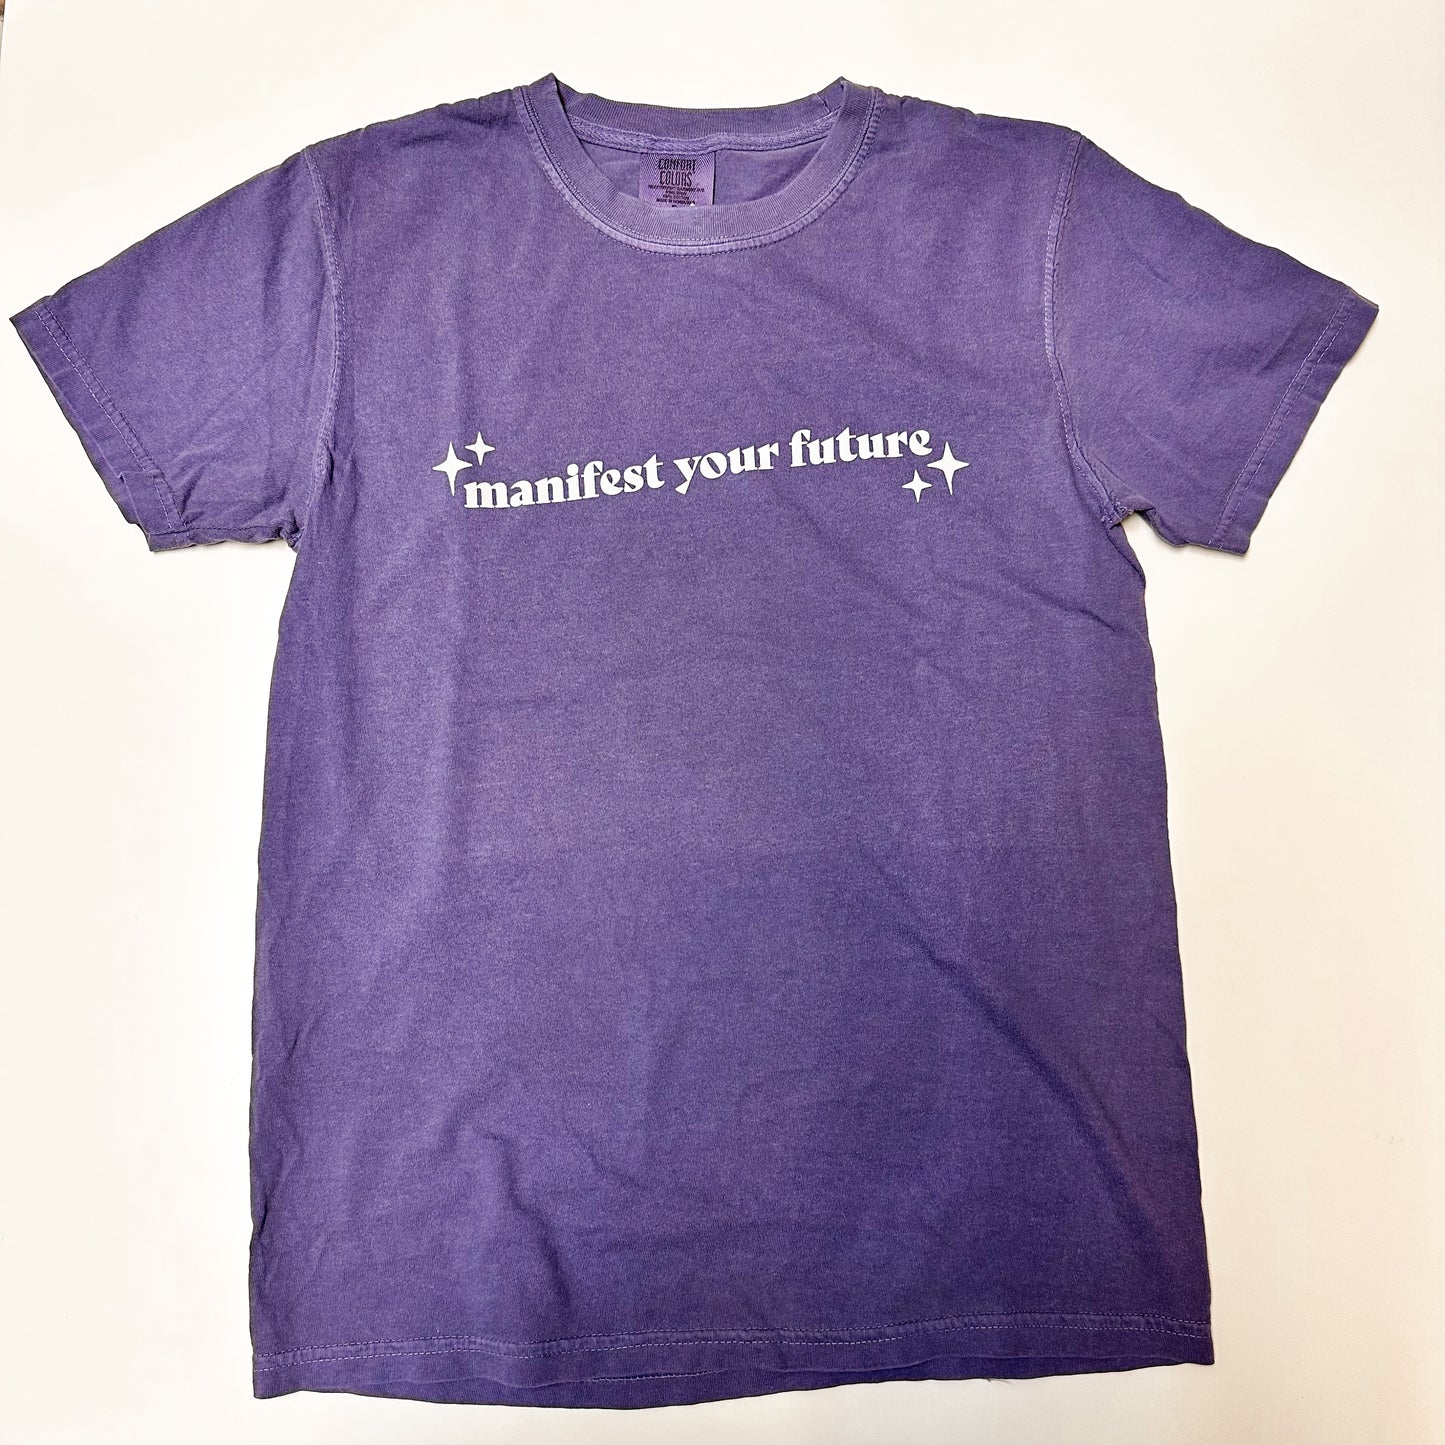 Manifest your future T-shirt - Purple